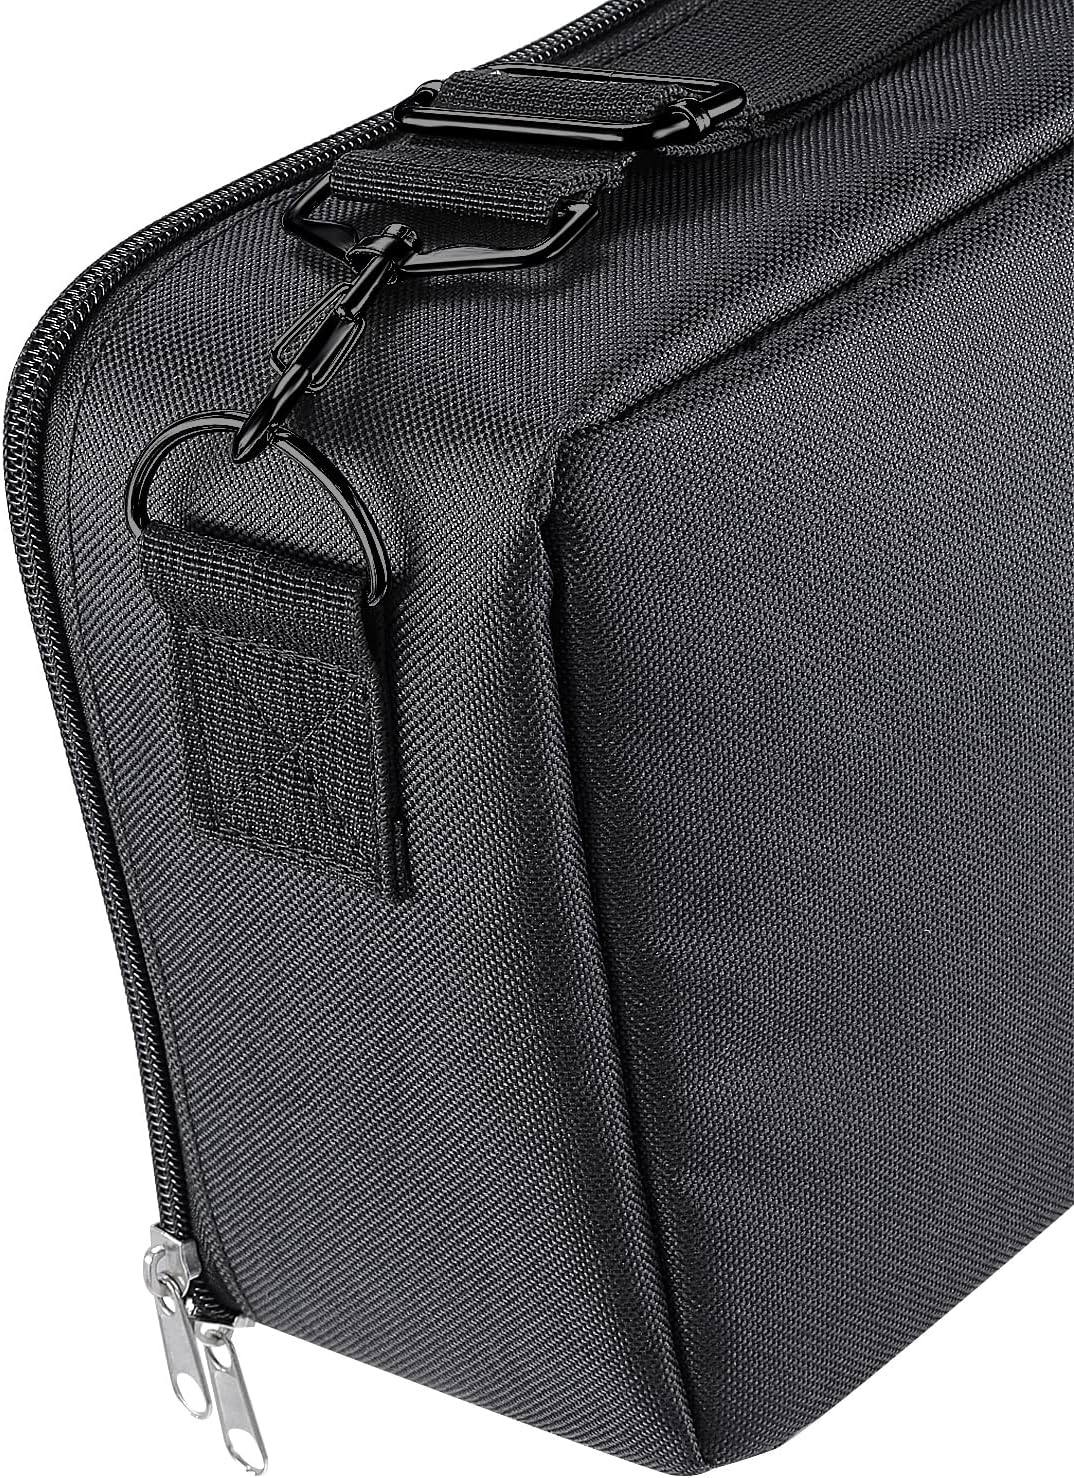 Neewer 76x17x9.5cm Photo Video Studio Kit Large Carrying Zipper Bag